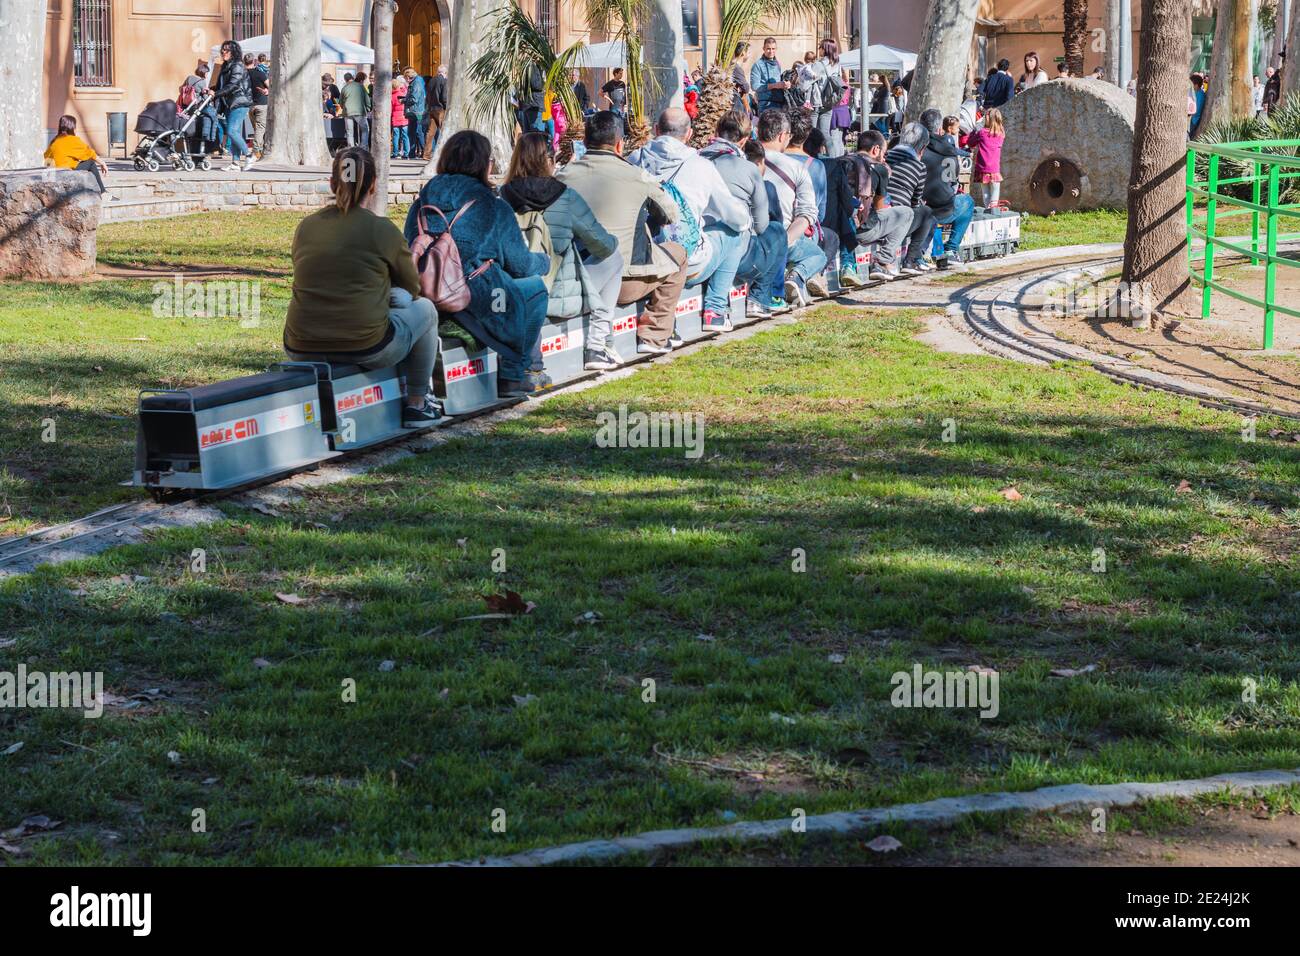 Cornellà de Llobregat, Spain, February 2 2020: miniature train circulating with people climbing on top Stock Photo